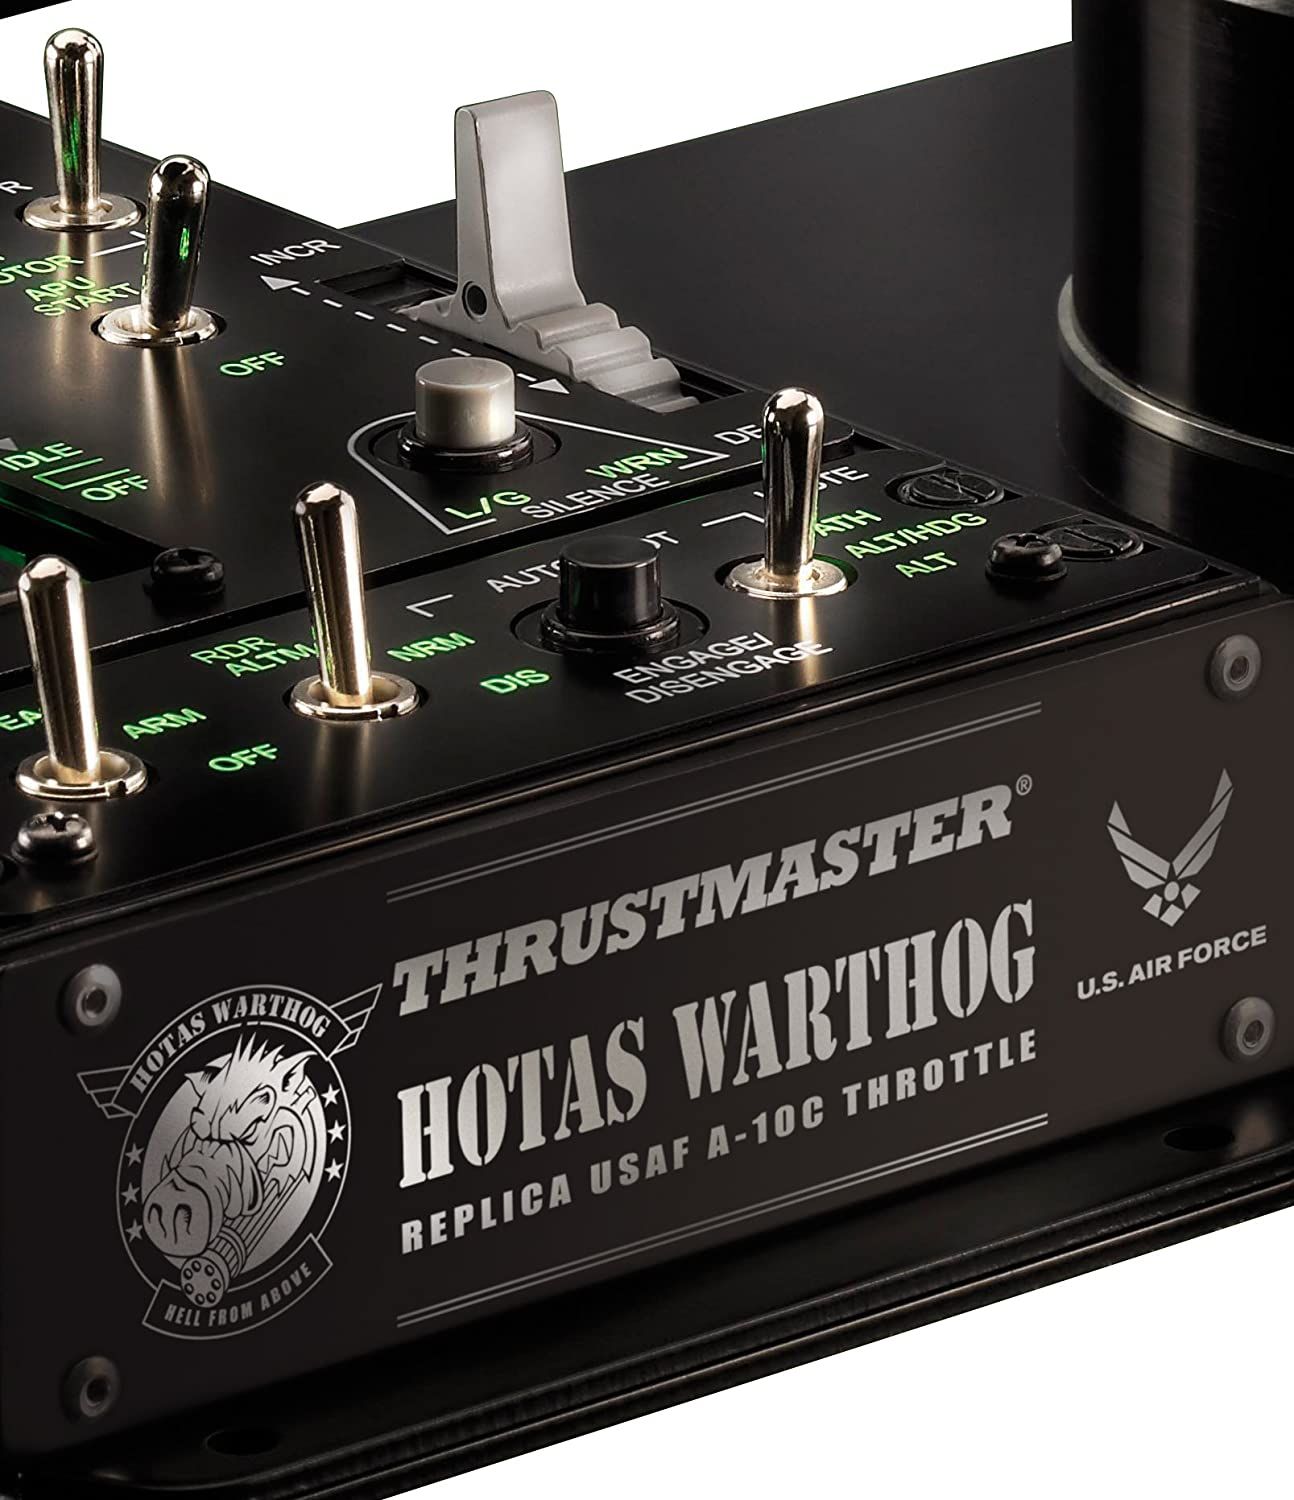 Thrustmaster-HOTAS-Warthog-003